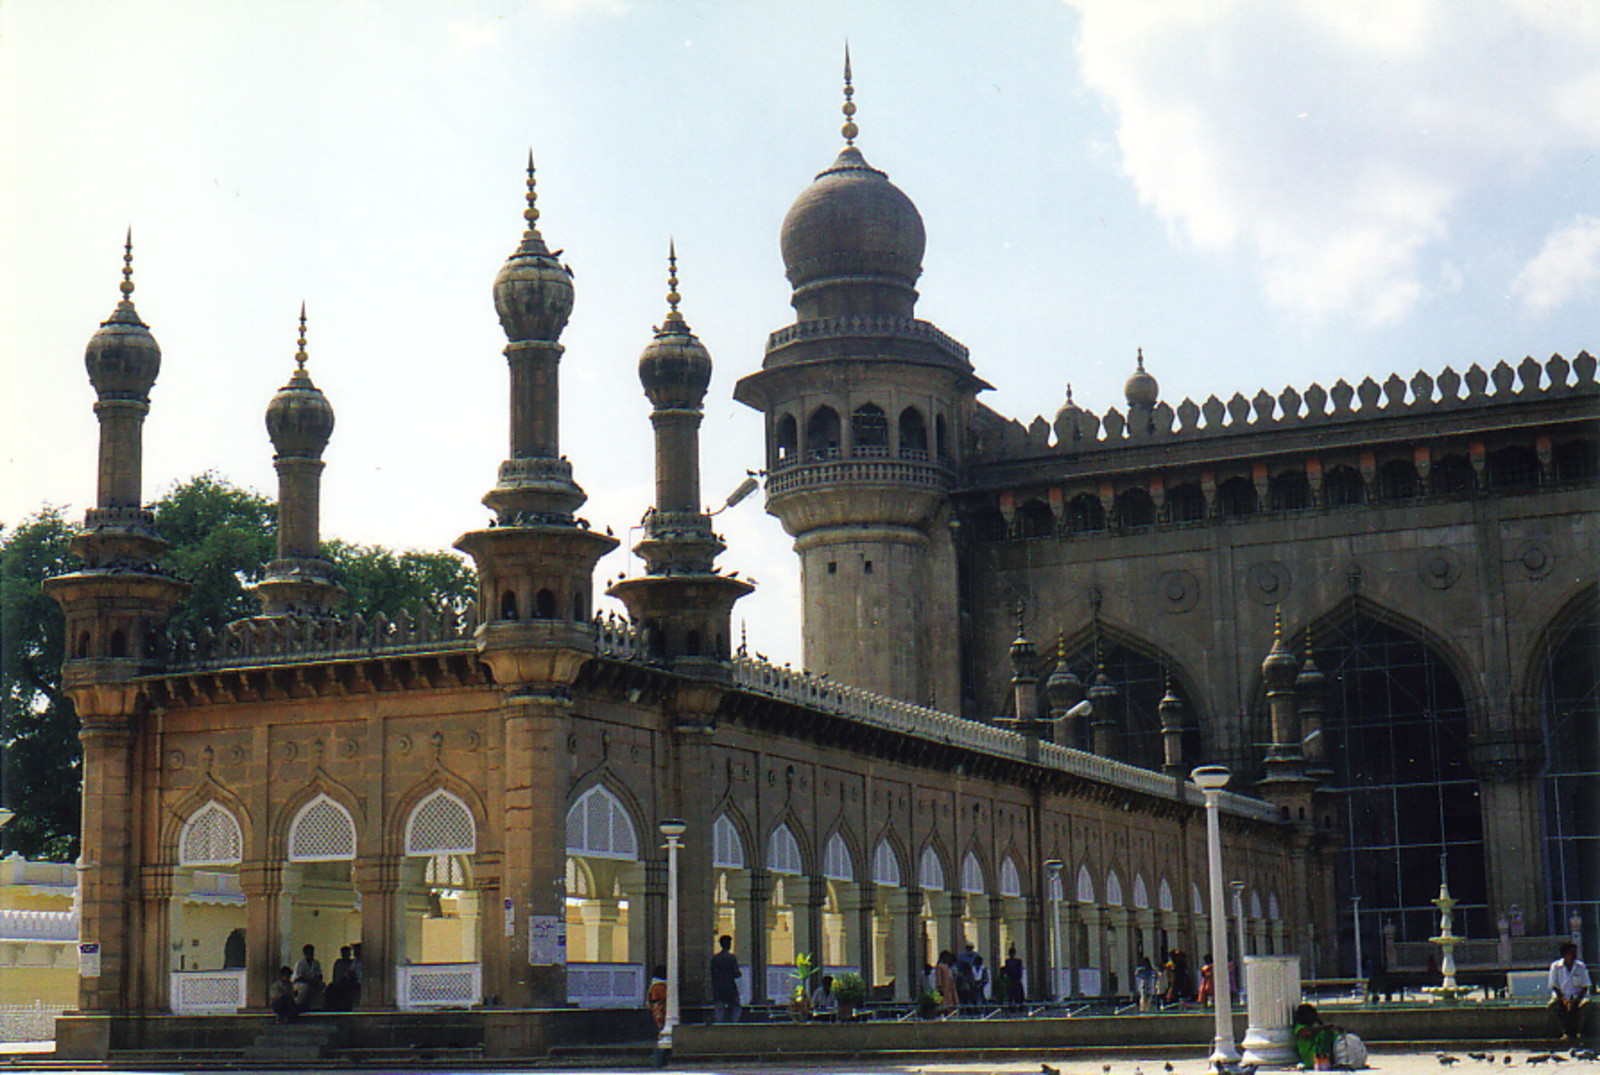 The Mecca Masjid